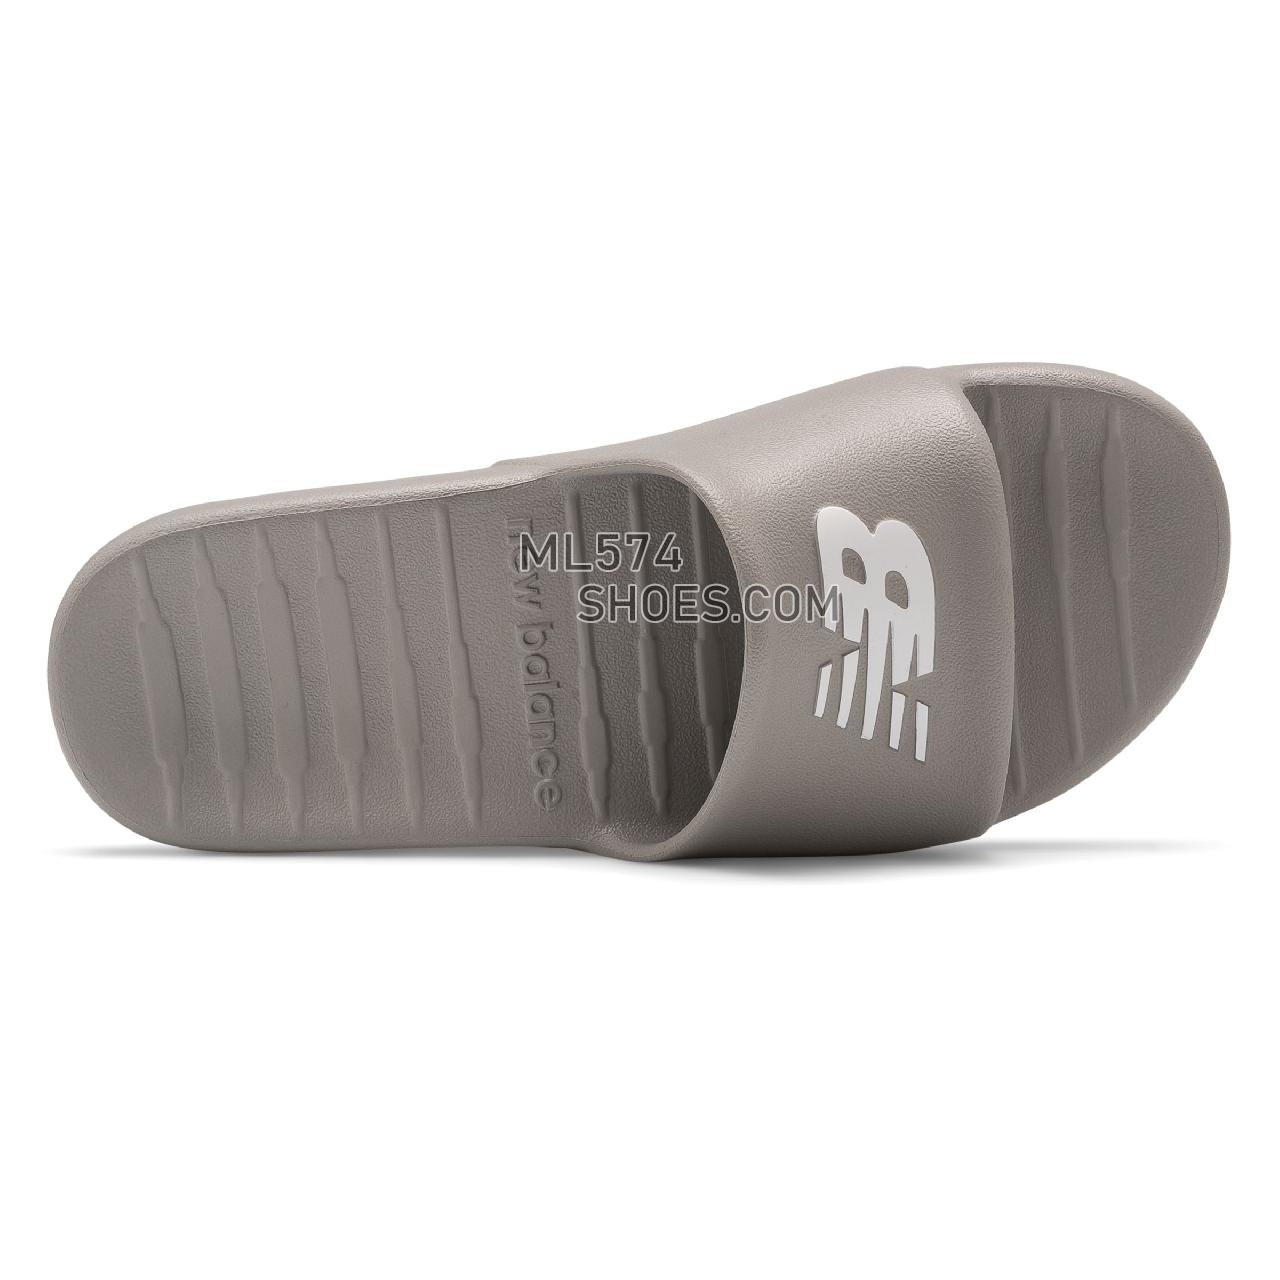 New Balance 100 - Men's Flip Flops - Grey with White - SUF100TG